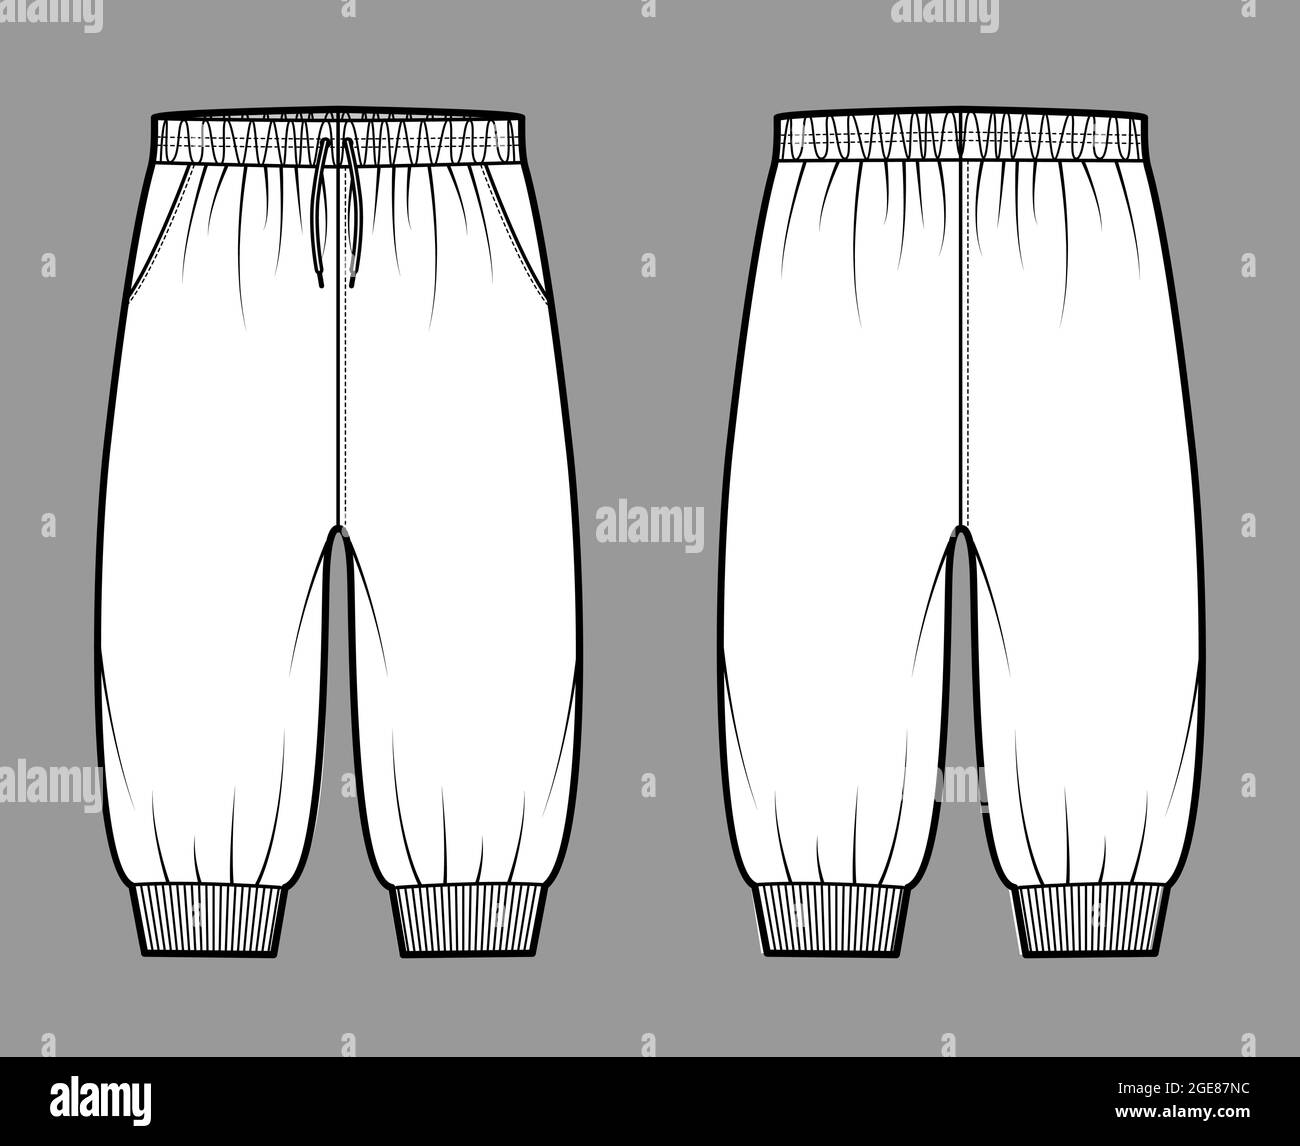 Black yoga pants Stock Vector Images - Alamy